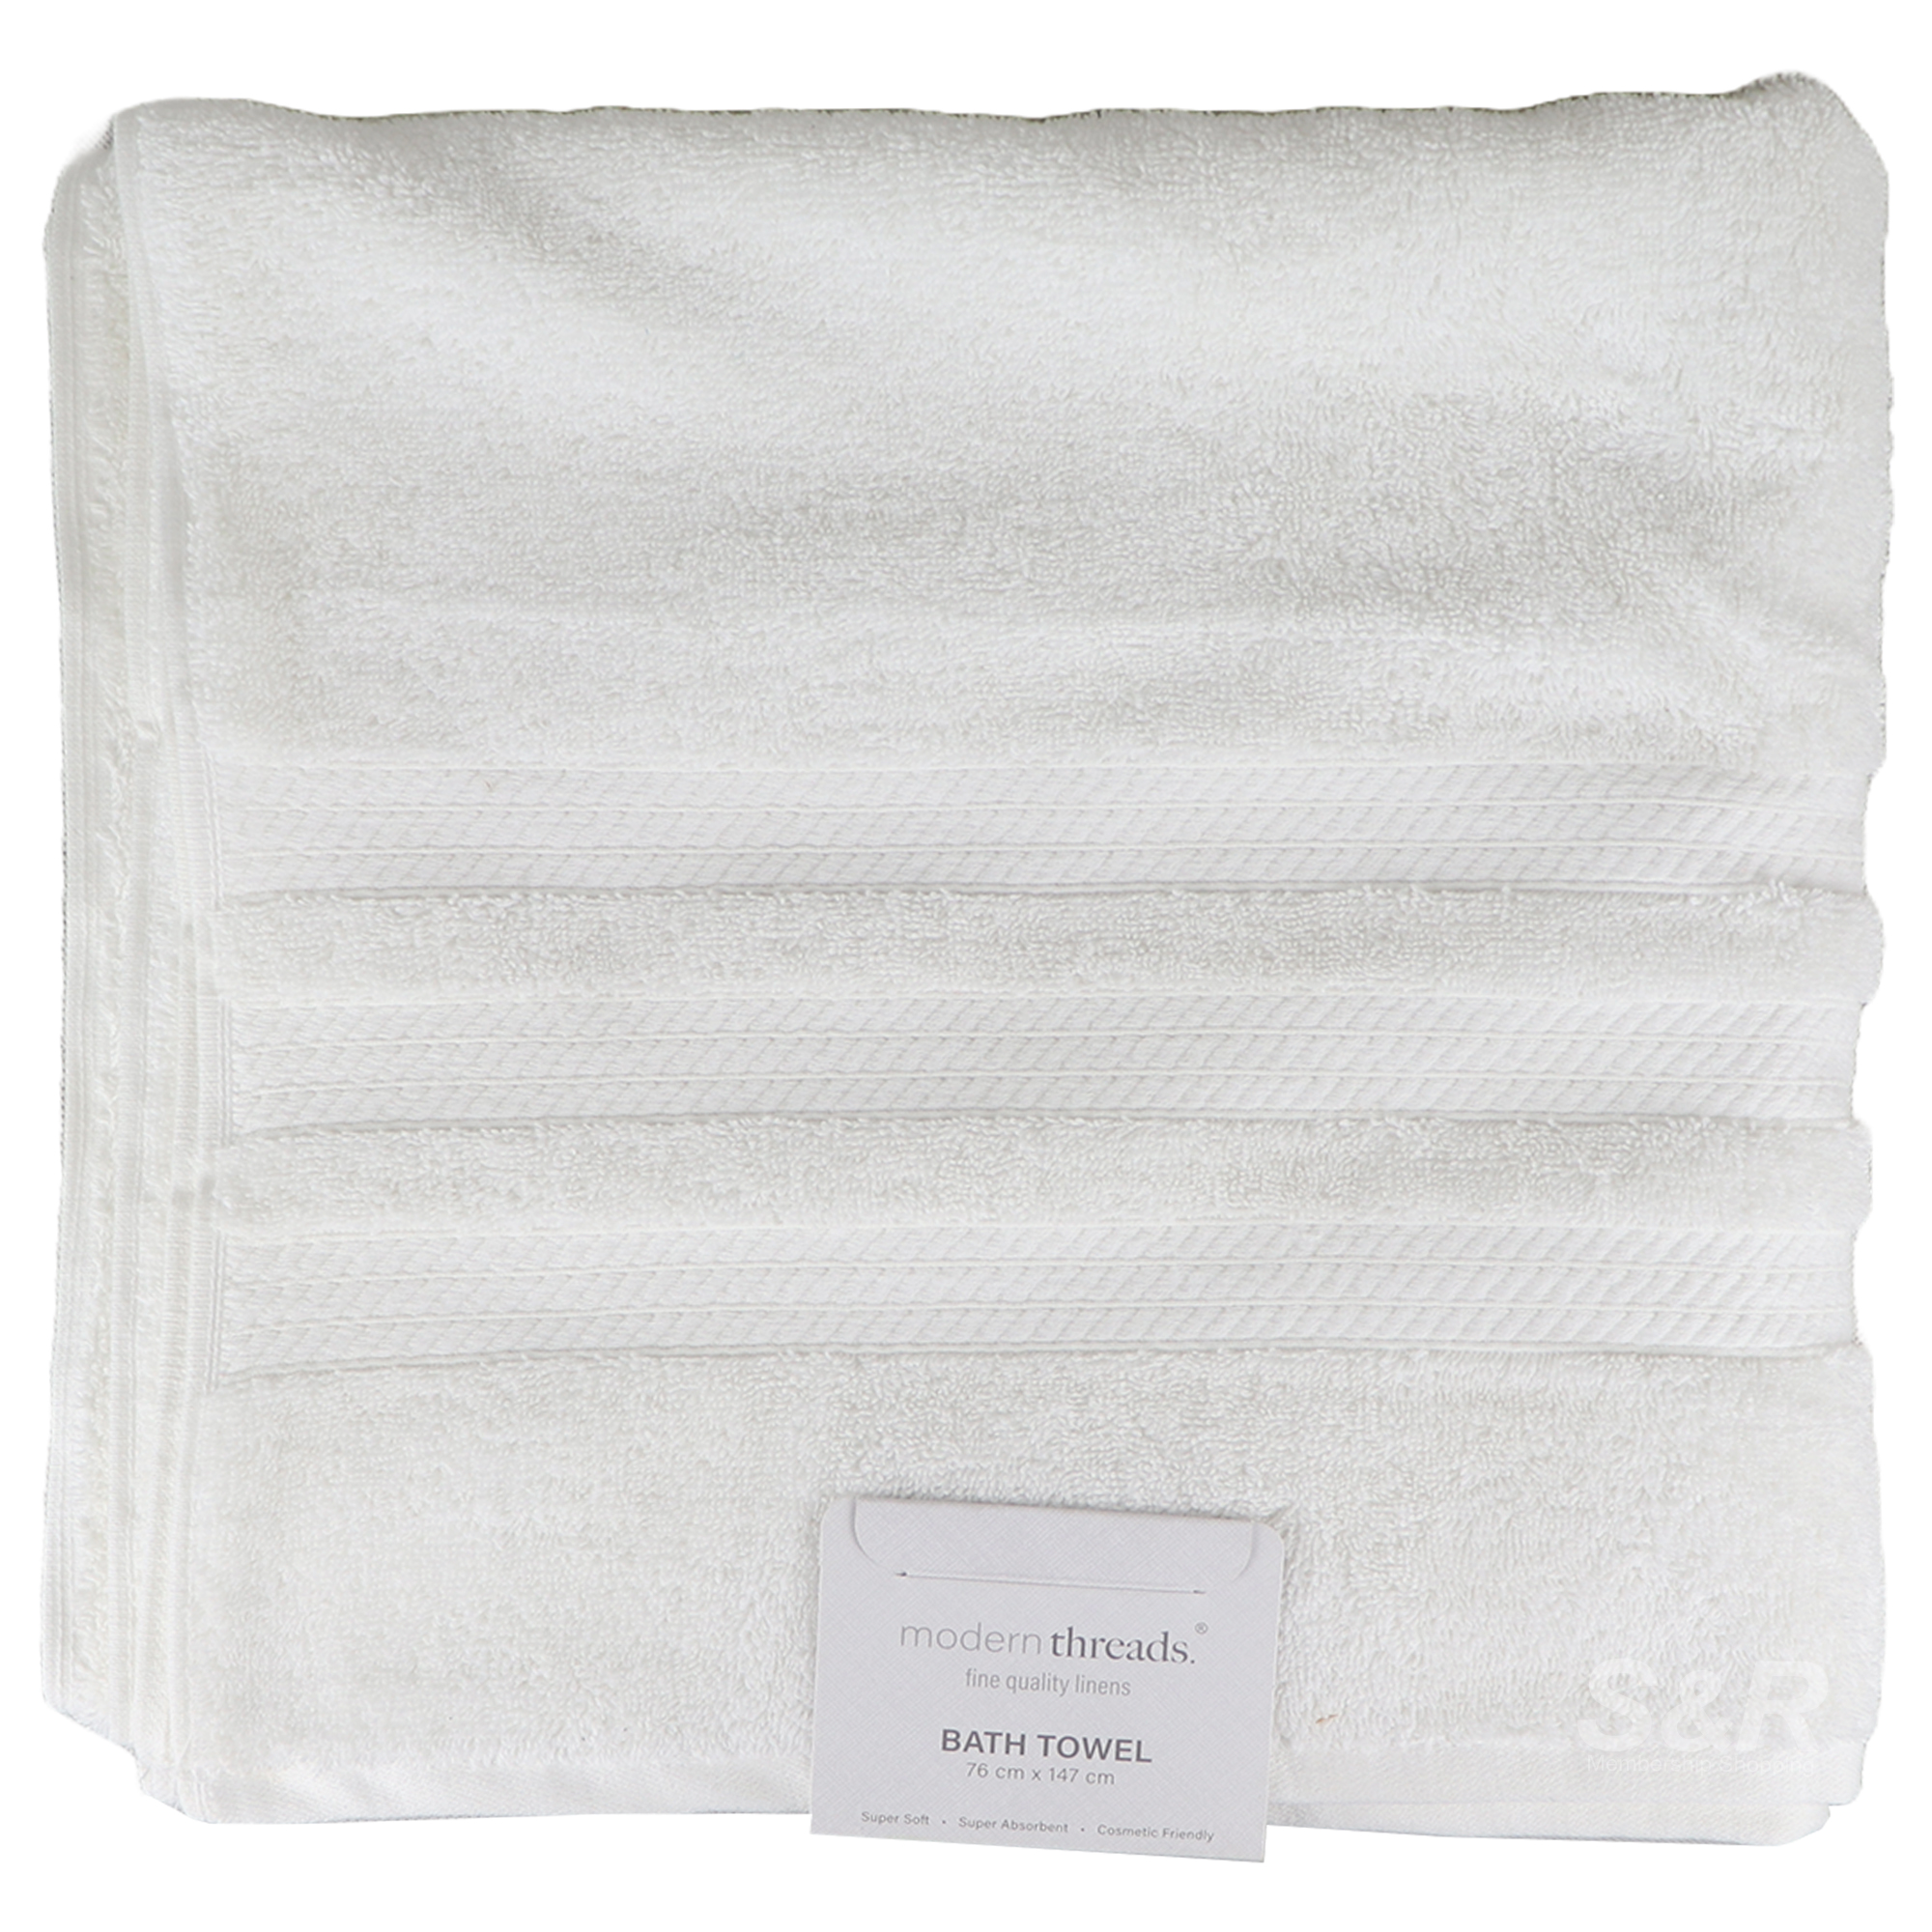 Modern Threads White Bath Towel 30x58in